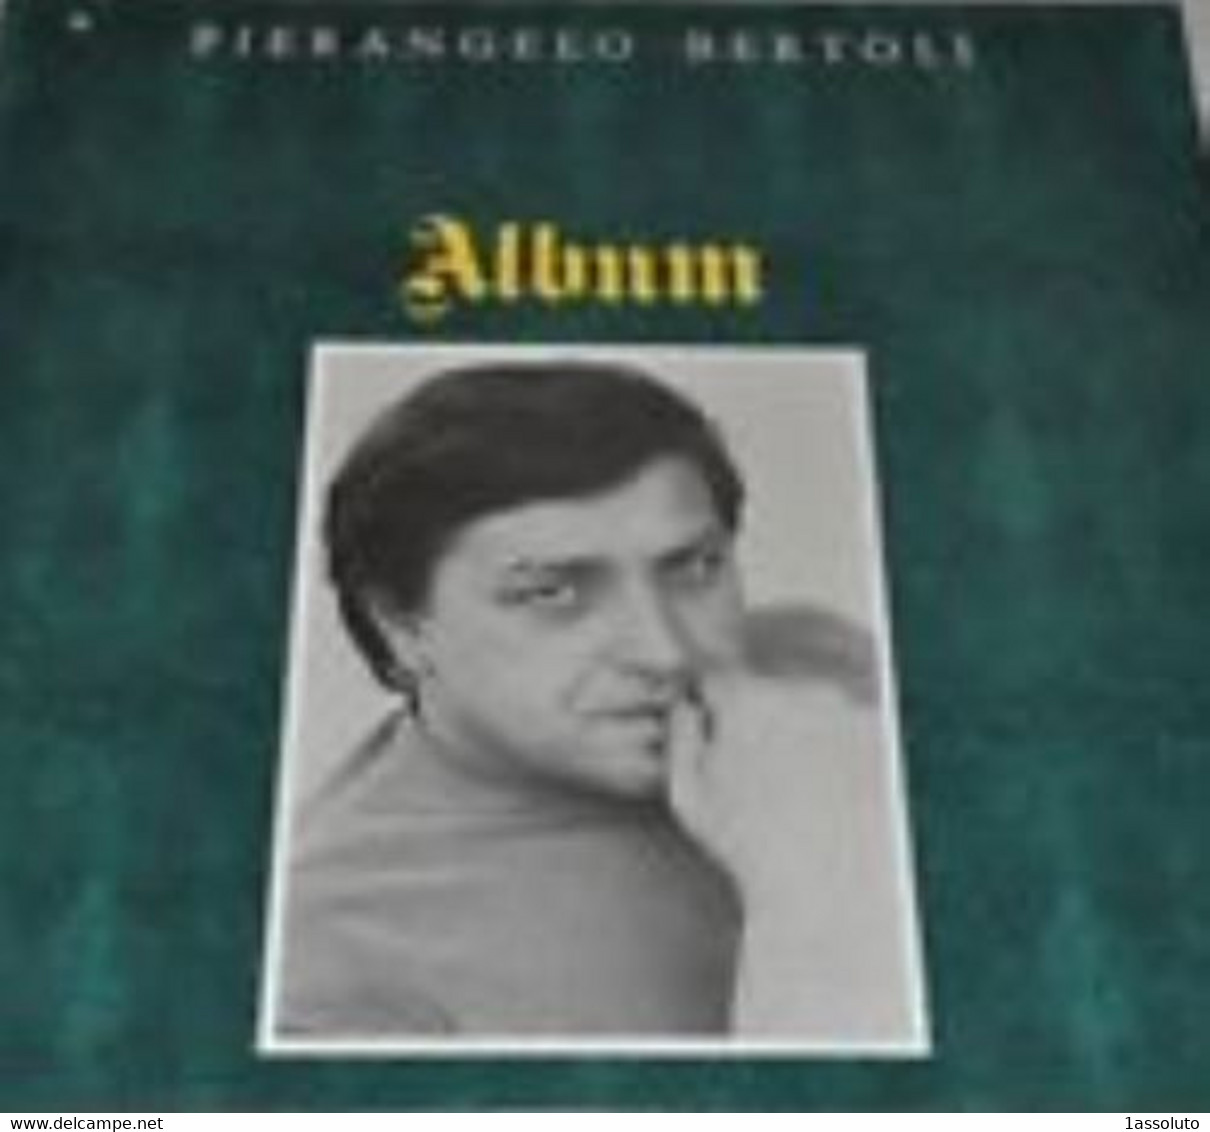 PIERANGELO BERTOLI - Album - - Andere - Italiaans